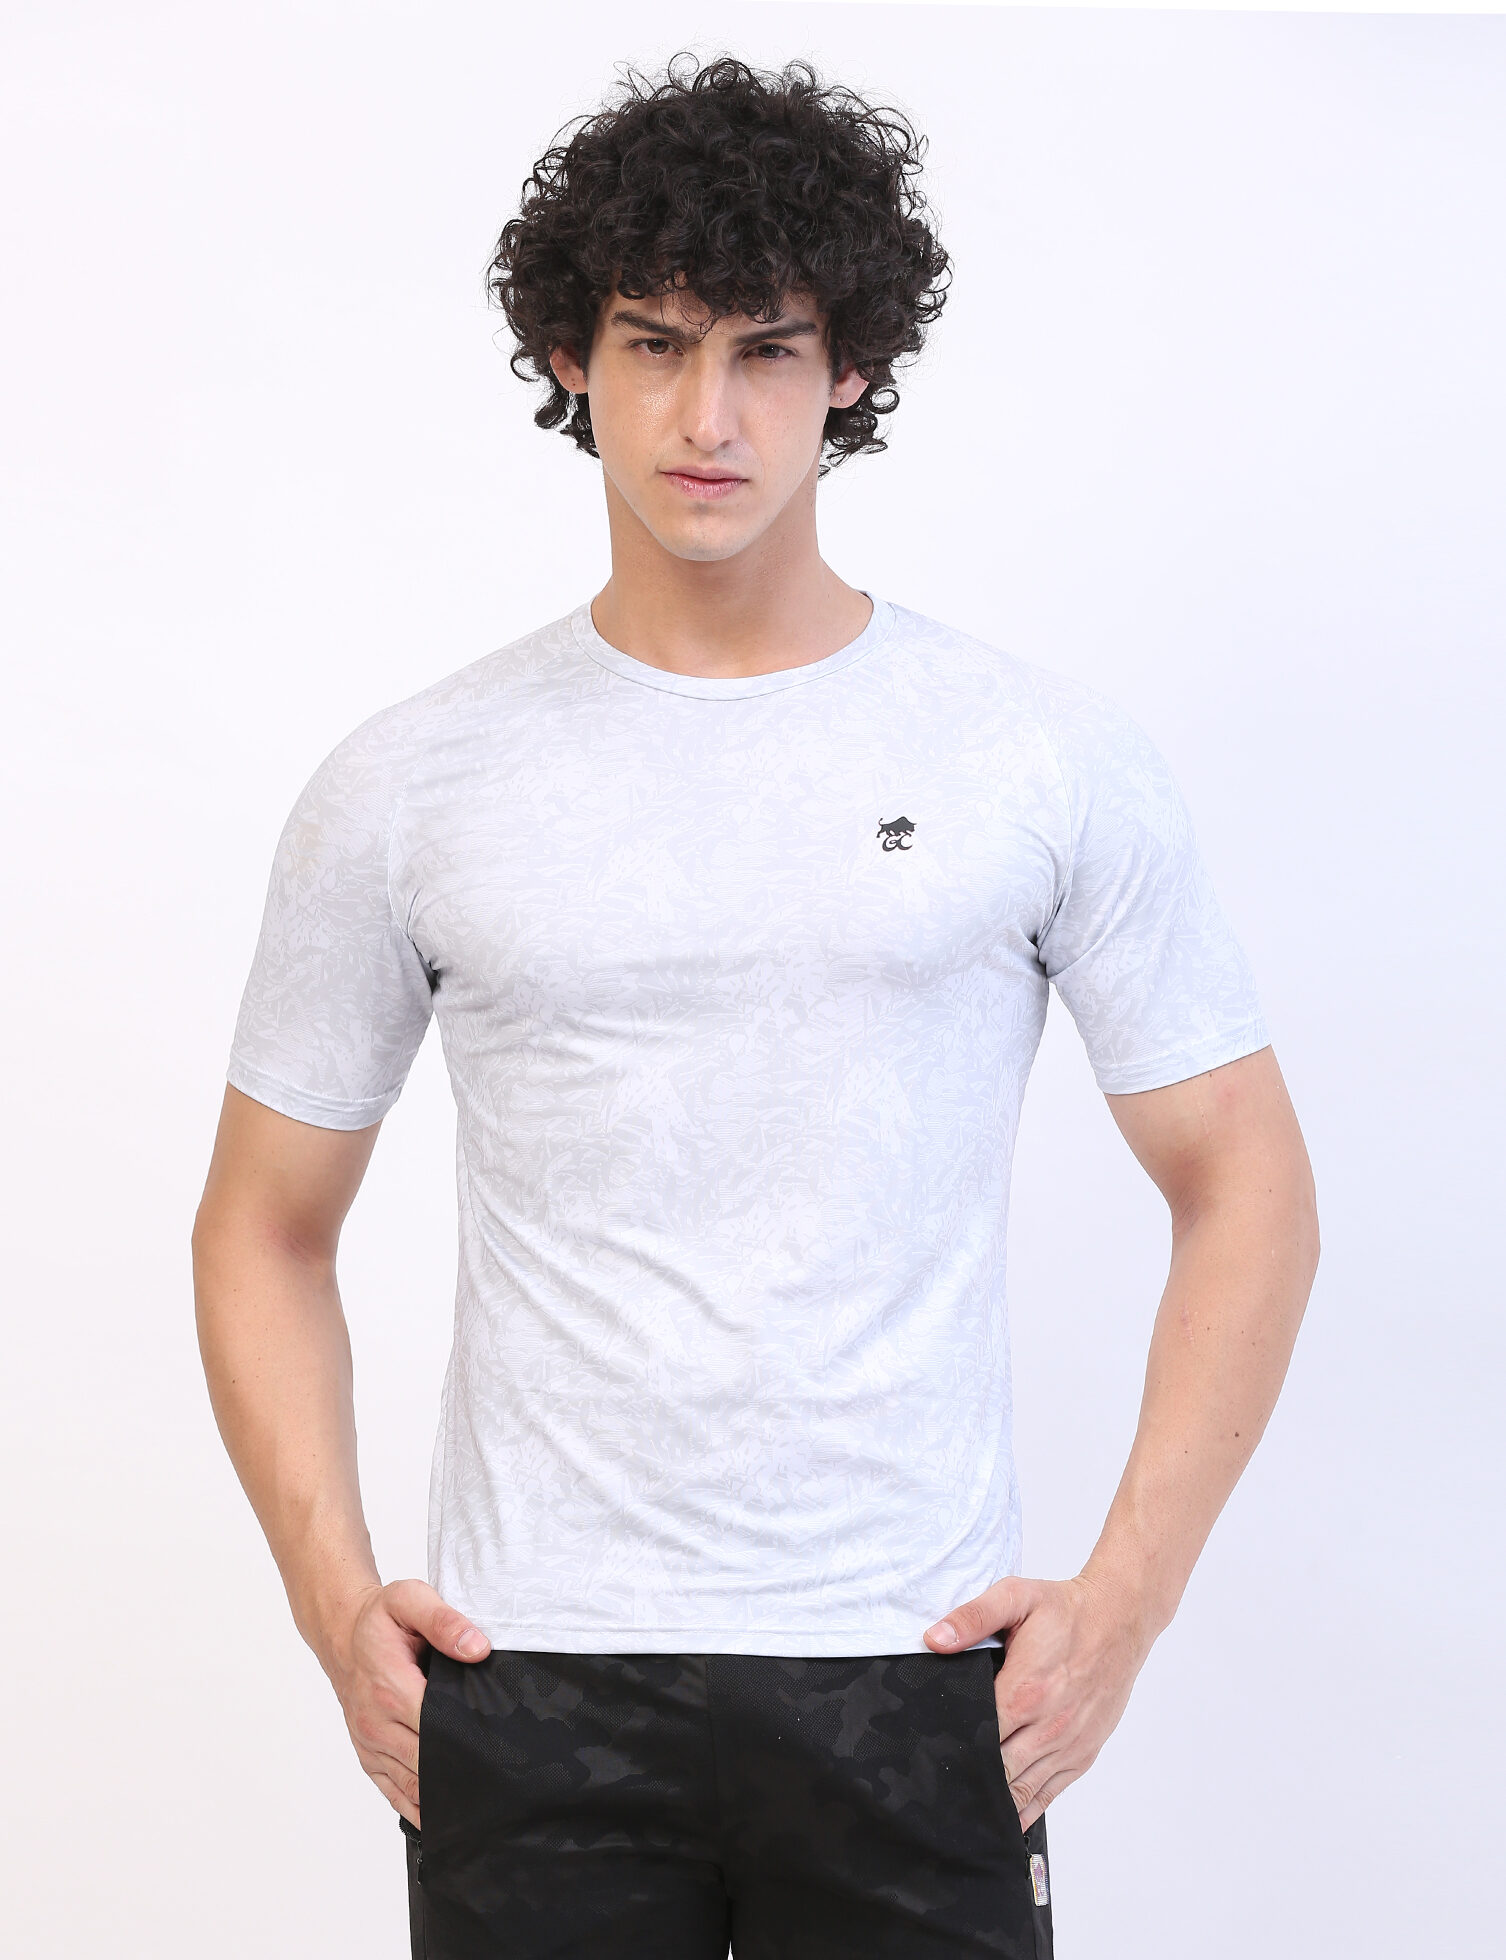 Men's GC T-Shirt H-Sleeve Color Grey Digital Printed - GC Naksum